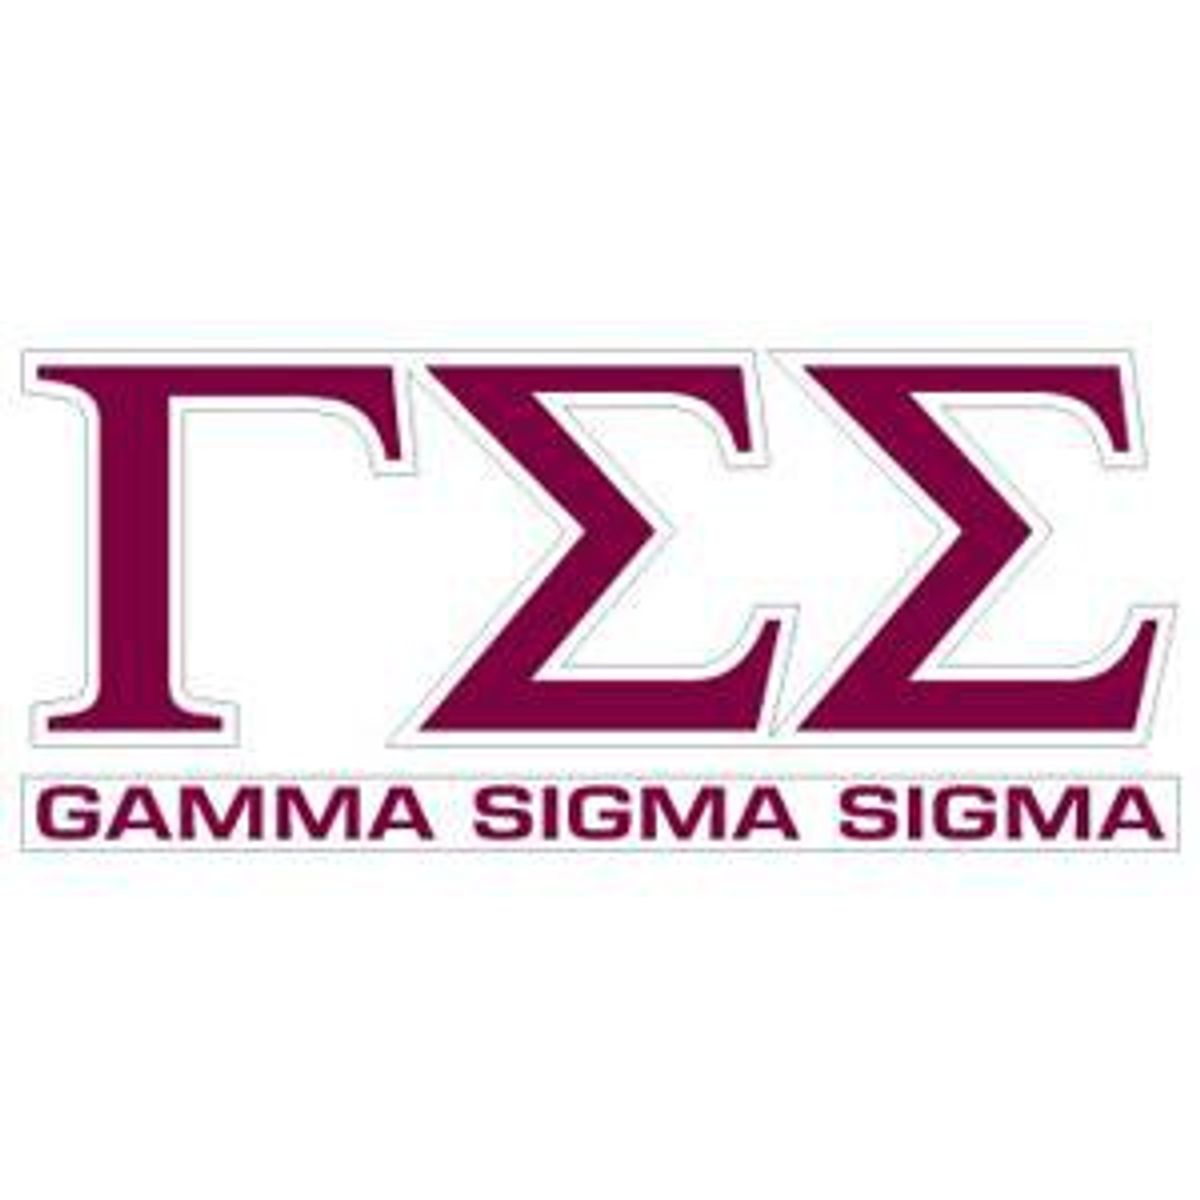 How I Really Miss Gamma Sigma Sigma